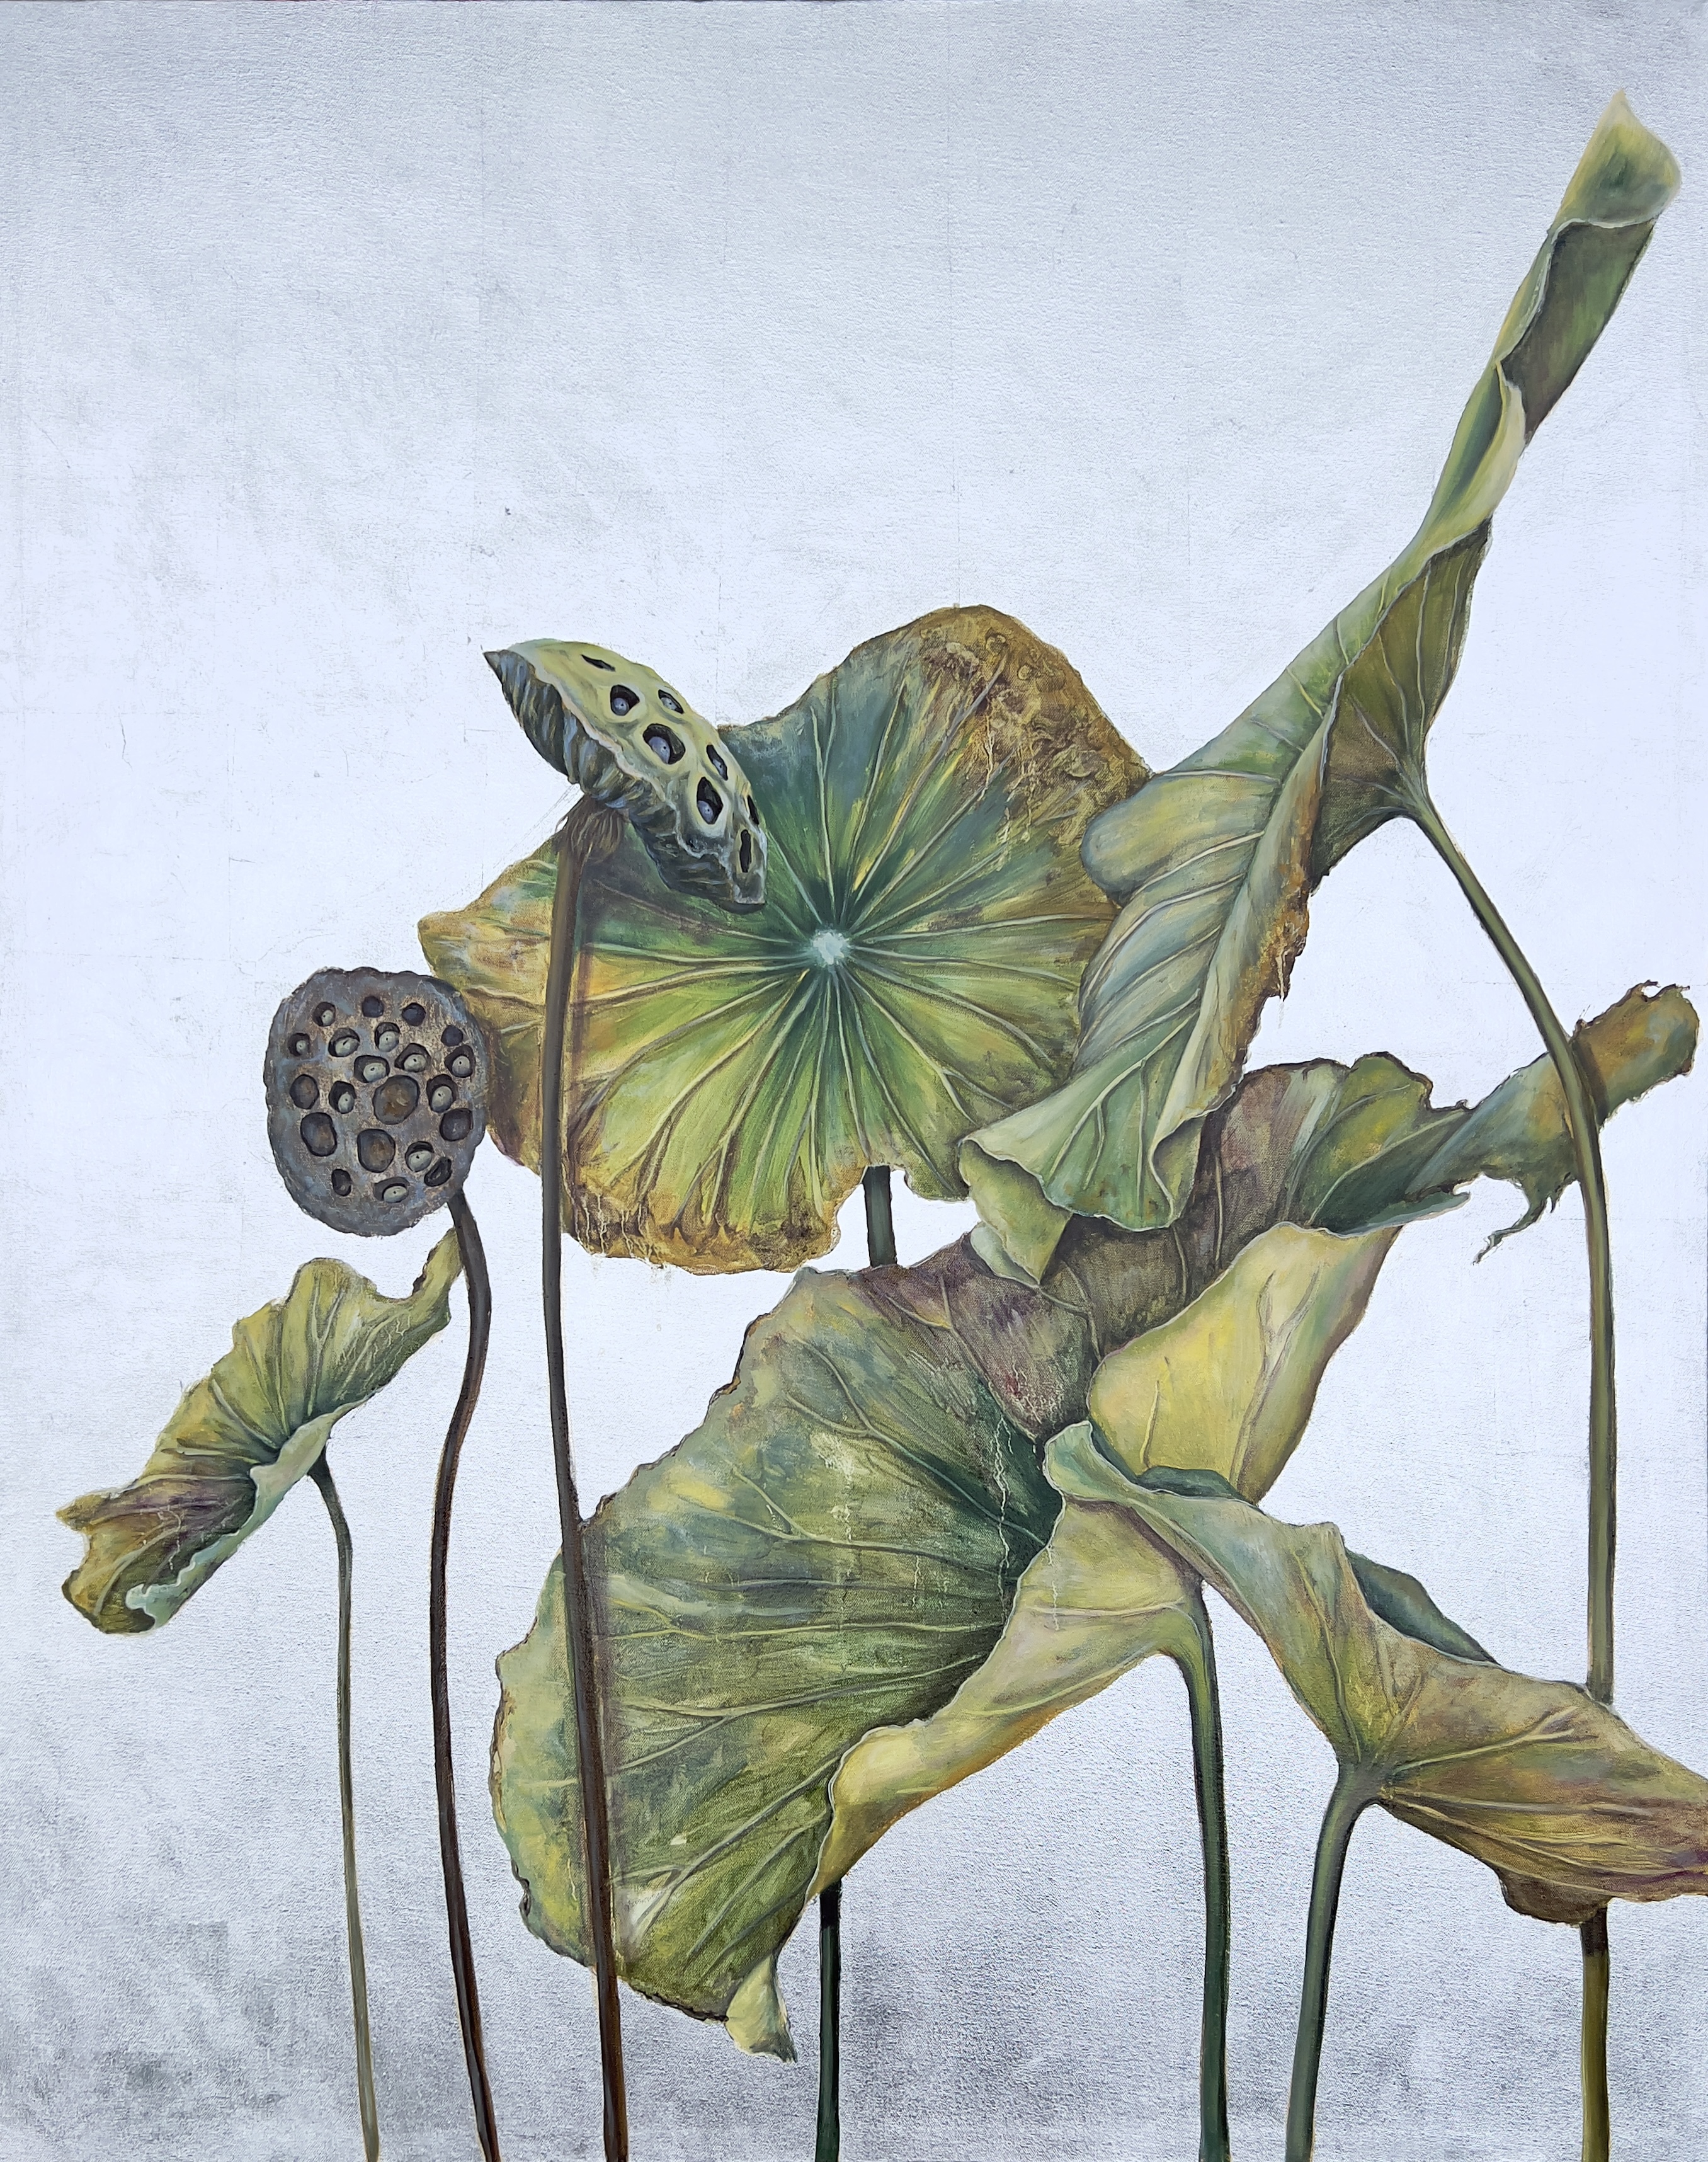 Painting, Studio Fine Art Gallery @ Affordable Art Fair, Daria Ivashchenko, Lotus flower